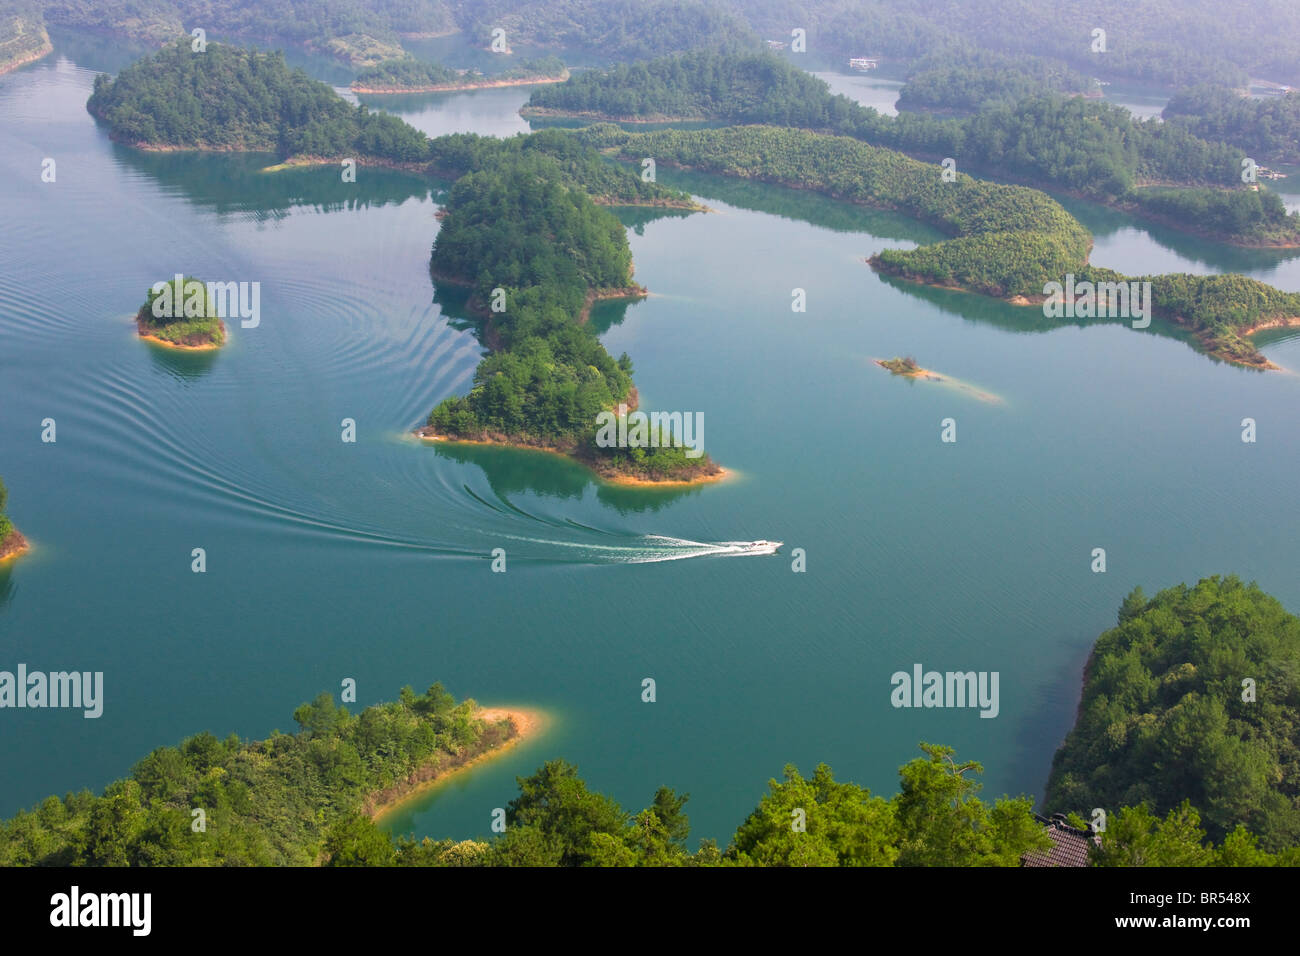 Aerial view of islands in Qiandao Lake (Thousand Island Lake), Jiande, Zhejiang Province, China Stock Photo